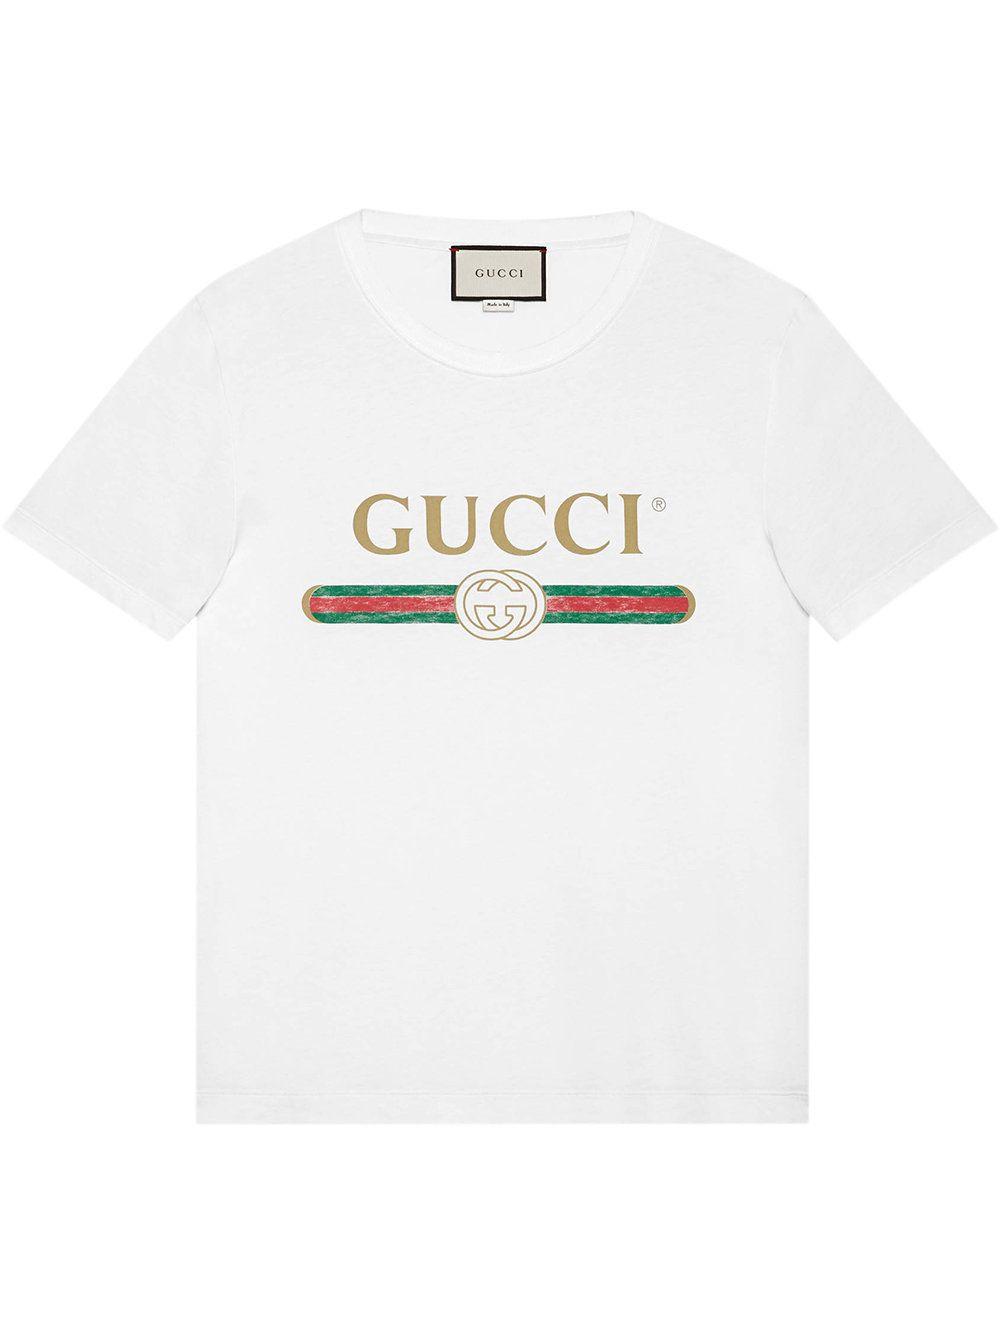 Black Red and Green Logo - Gucci Gucci Print T Shirt 440103 X3F05 BONE BLACK RED GREEN